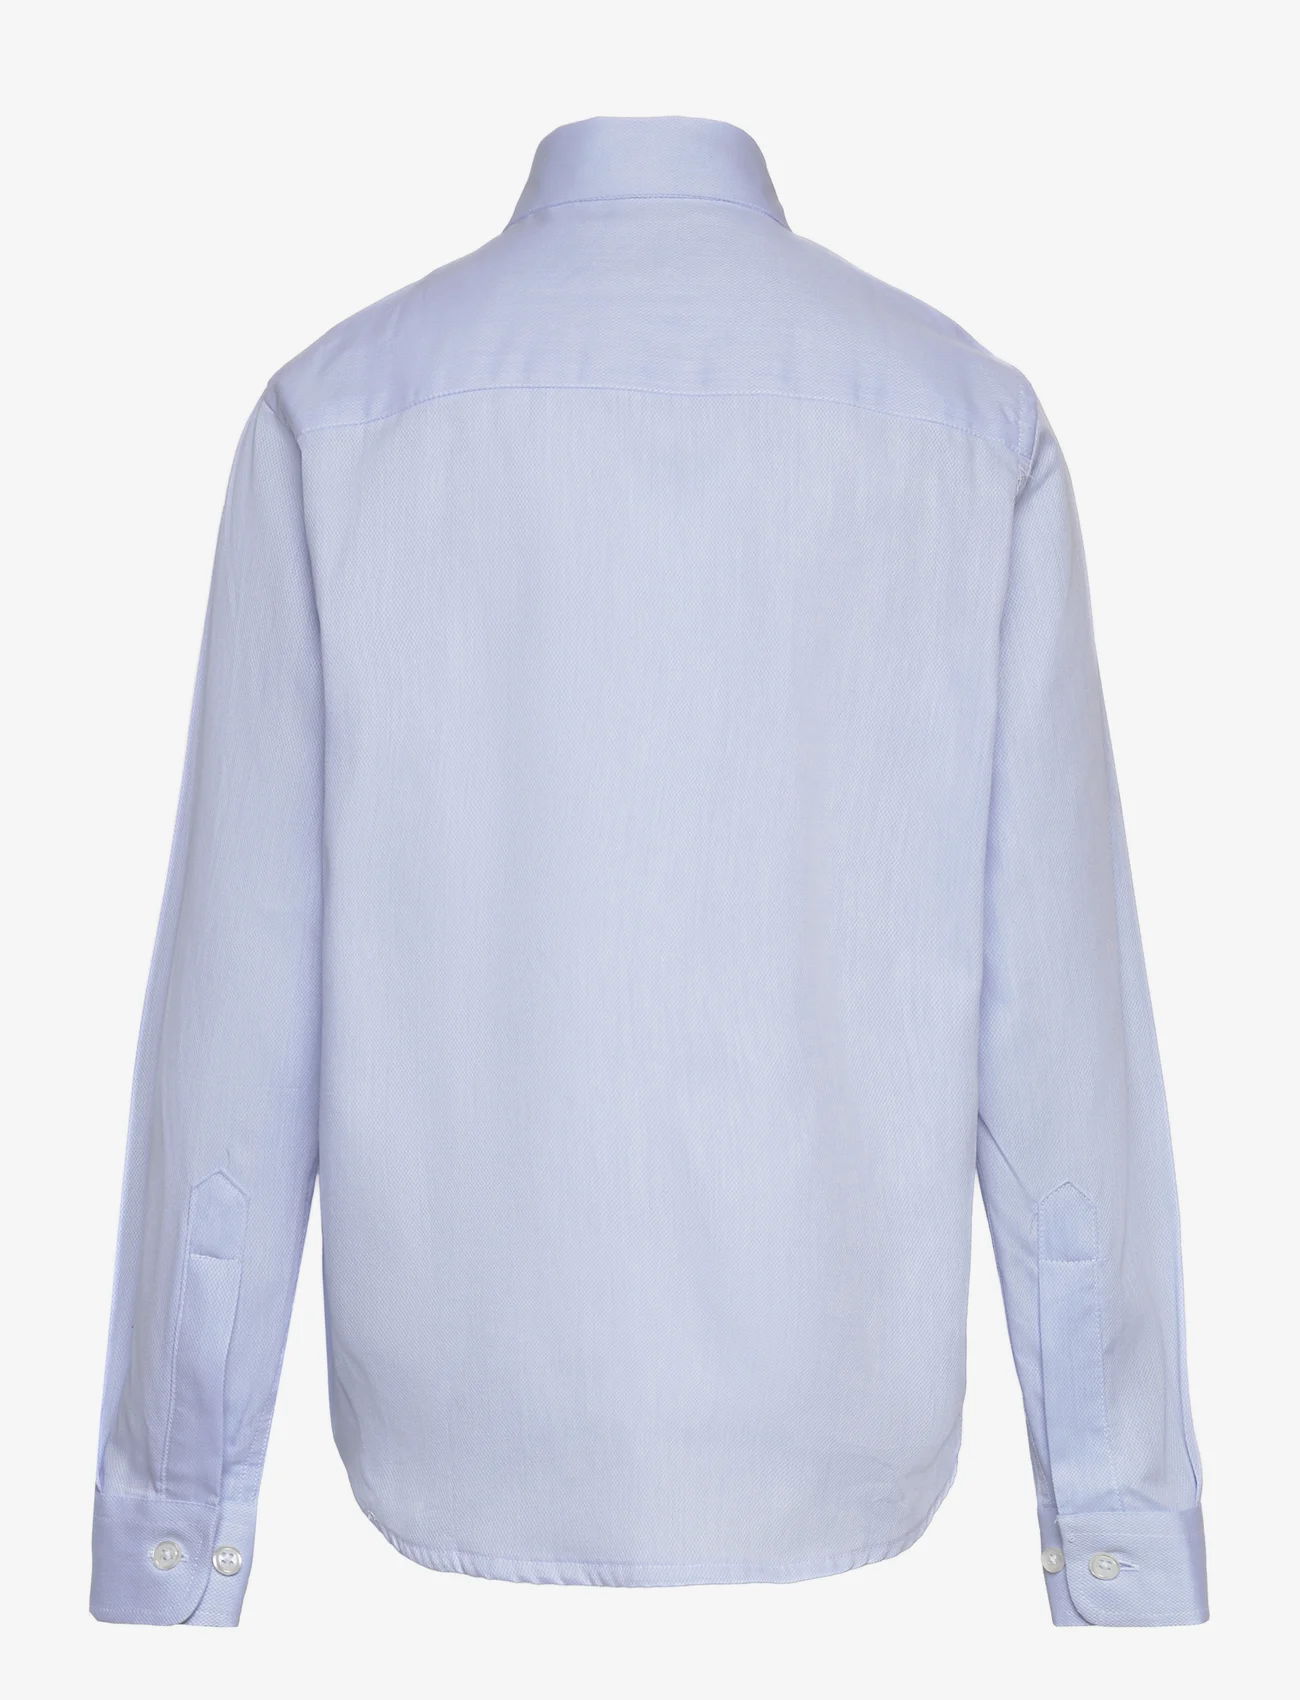 Grunt - Tex Twill Ice Shirt - long-sleeved shirts - blue - 1